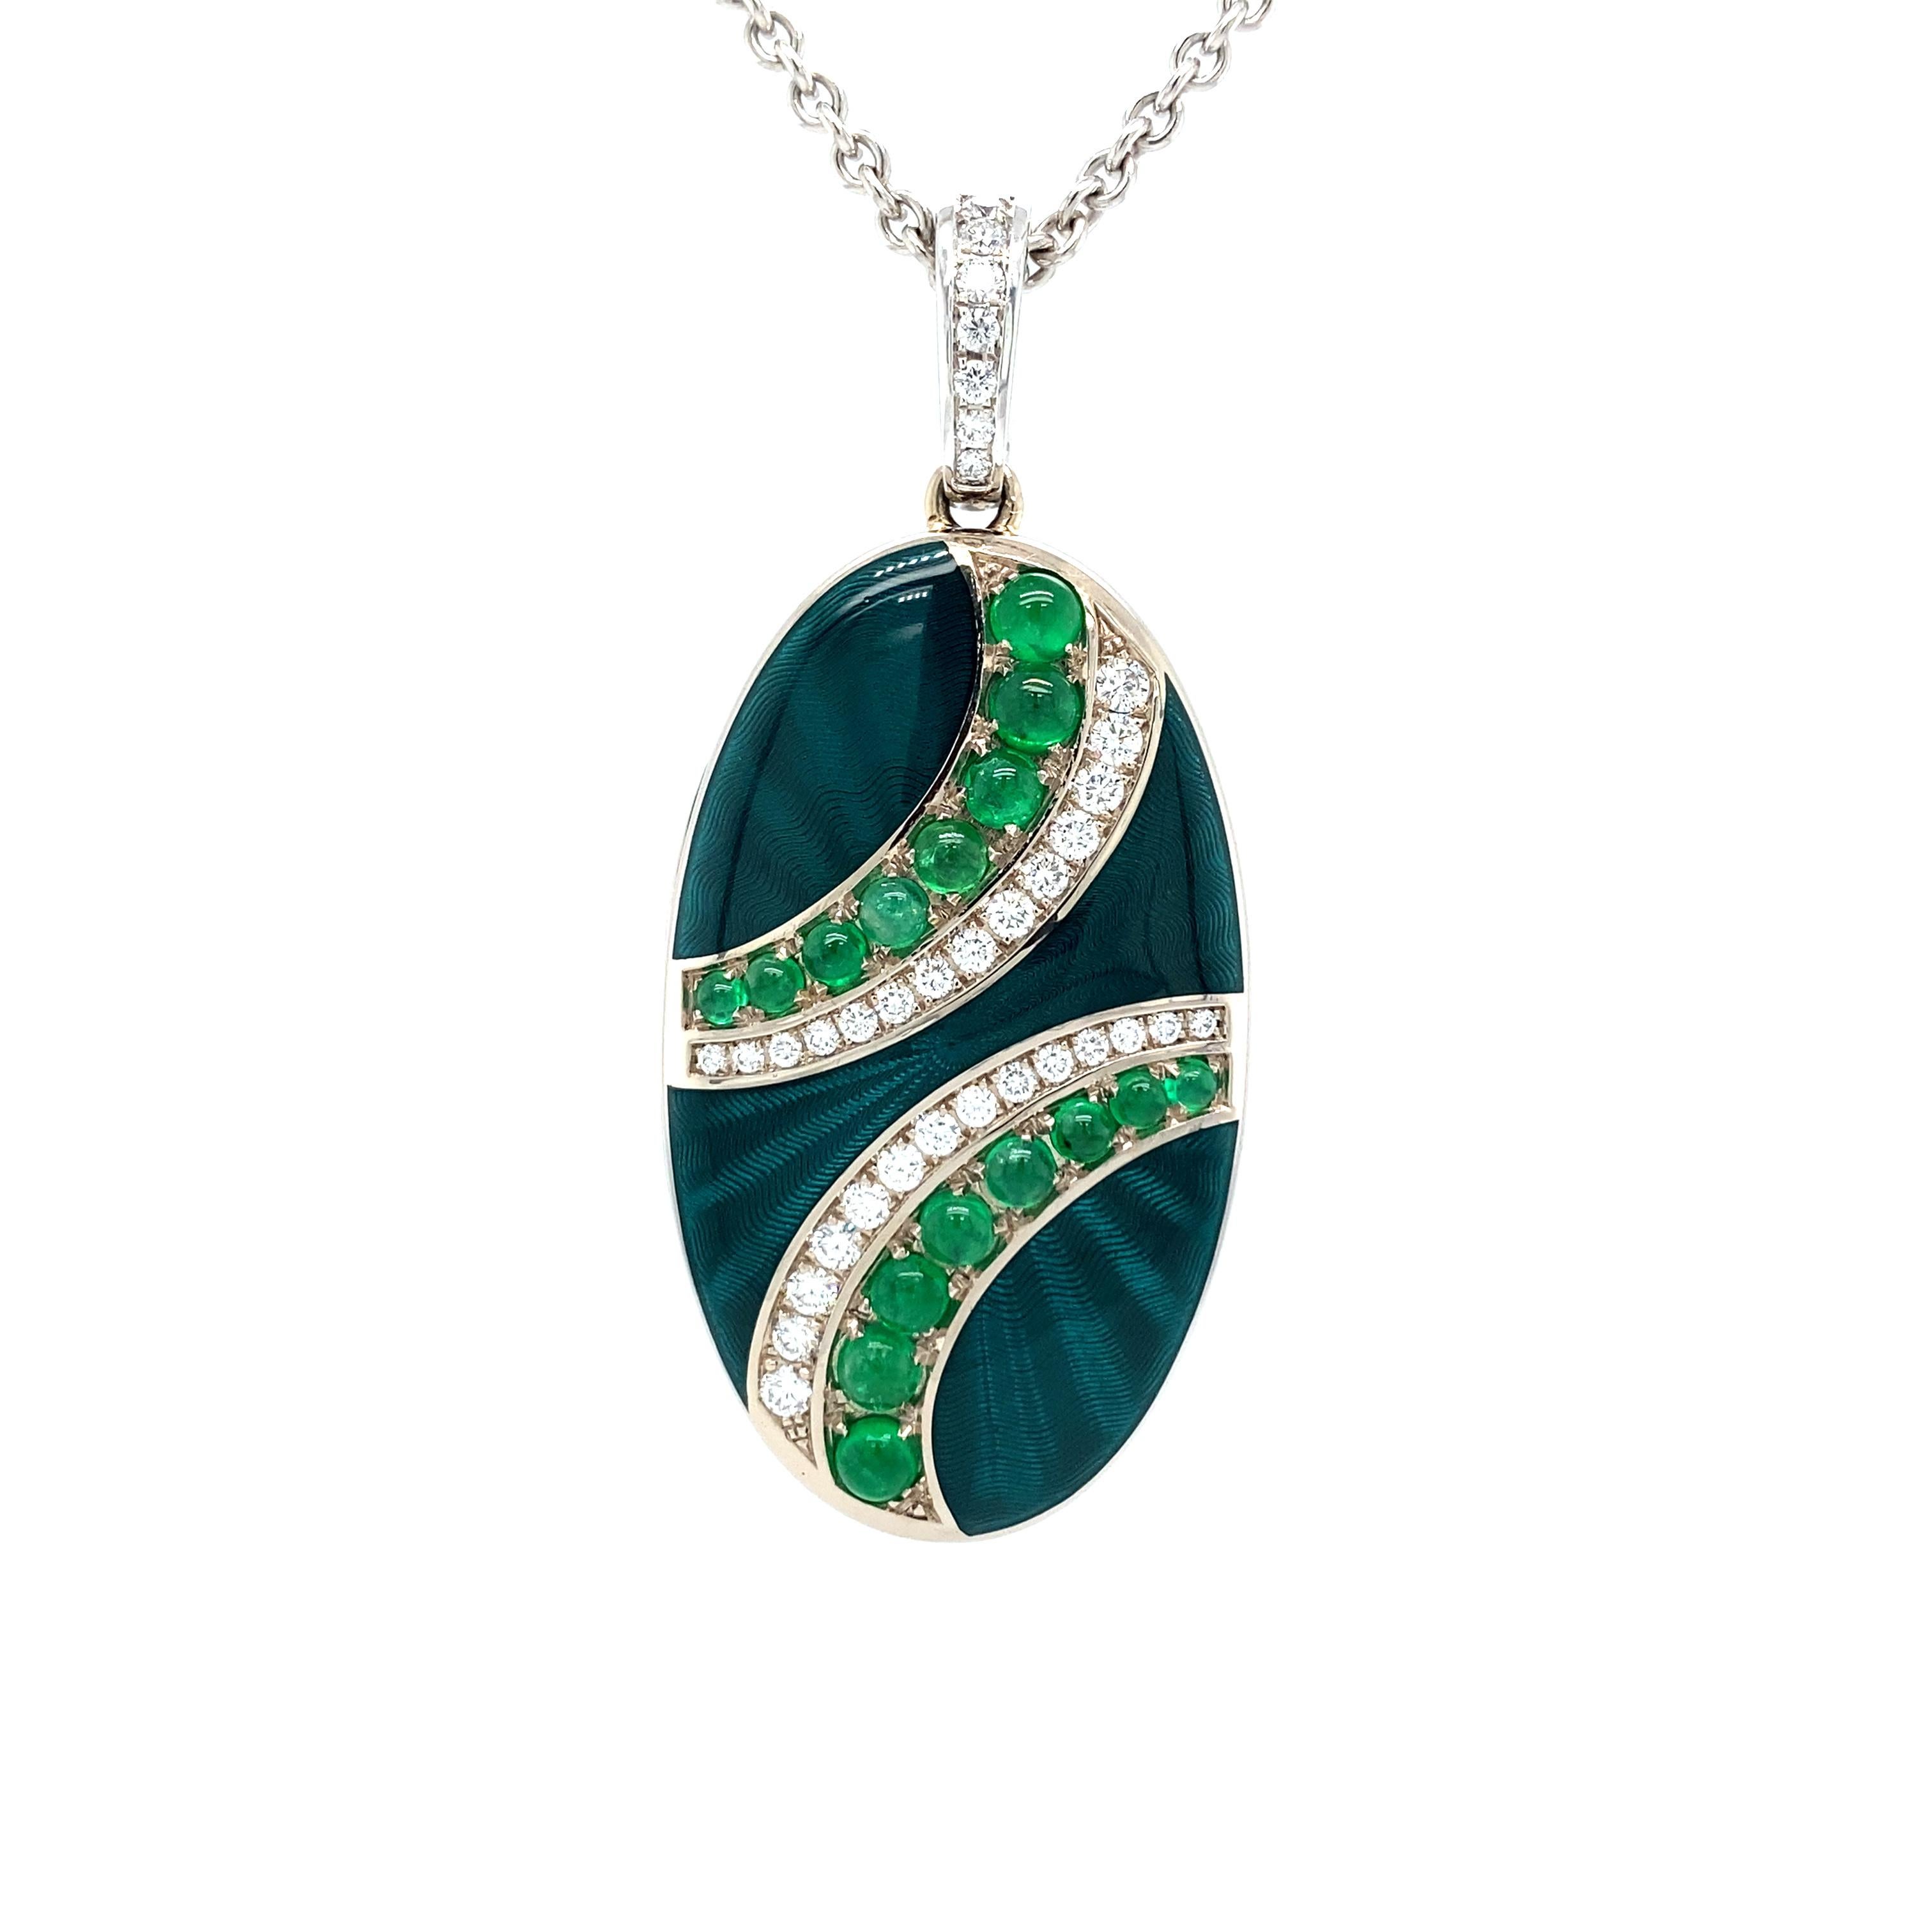 Women's Oval Locket Pendant 18k White Gold Green Enamel 35 Diamonds 16 Emeralds Cabochon For Sale